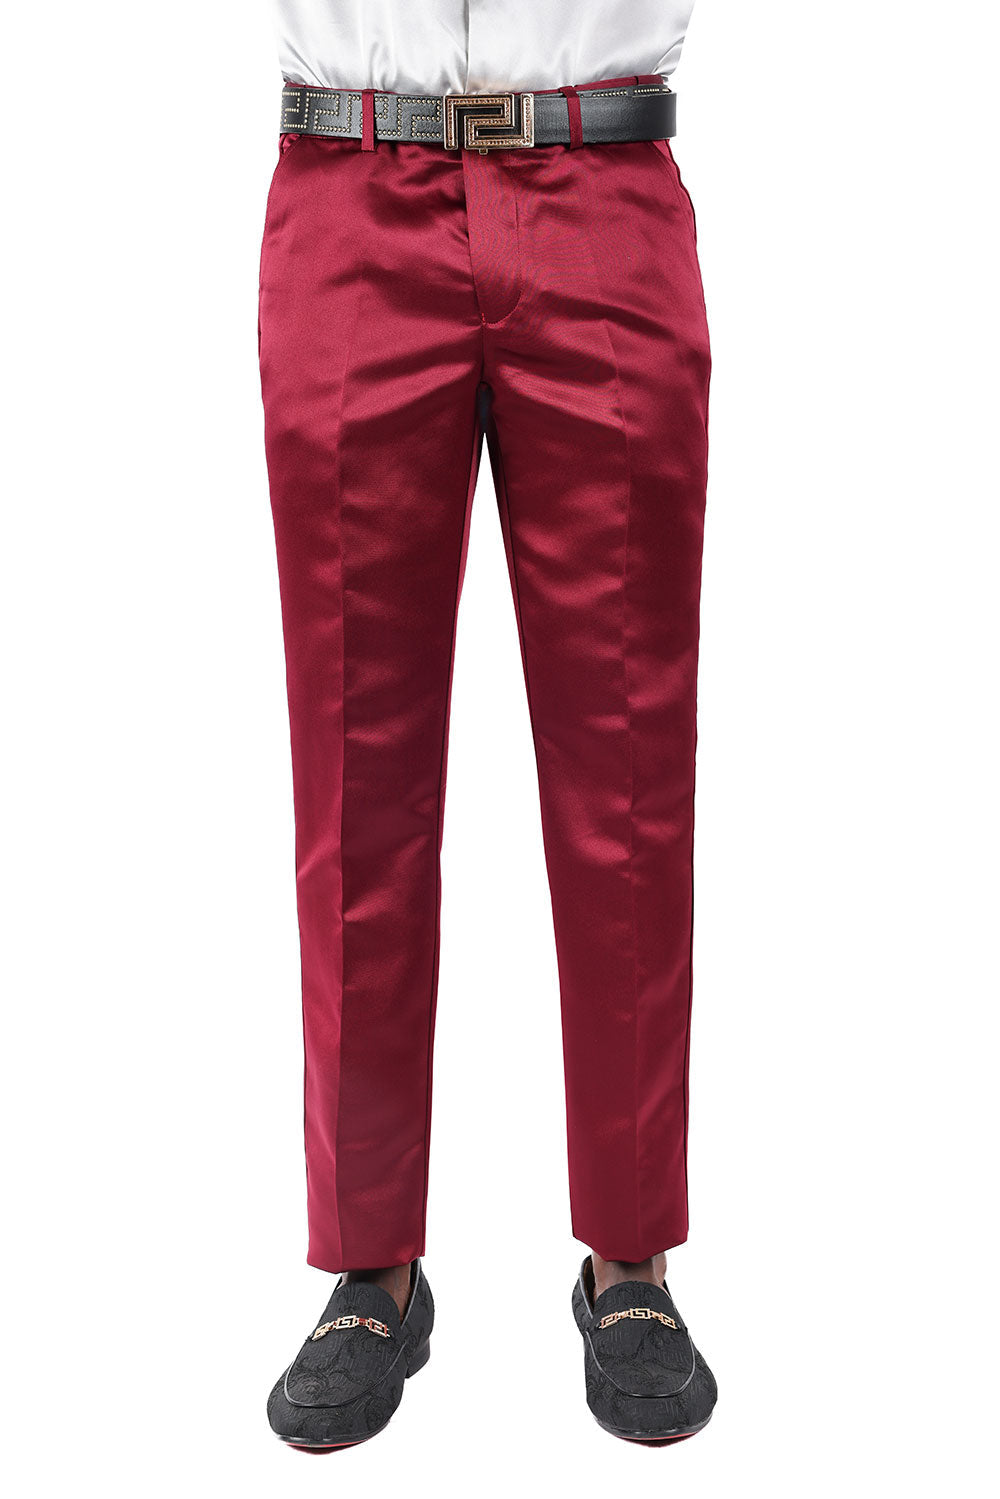 BARABAS Men's Solid Color Plain Shiny Chino Dress Pants 3CP02 Burgundy